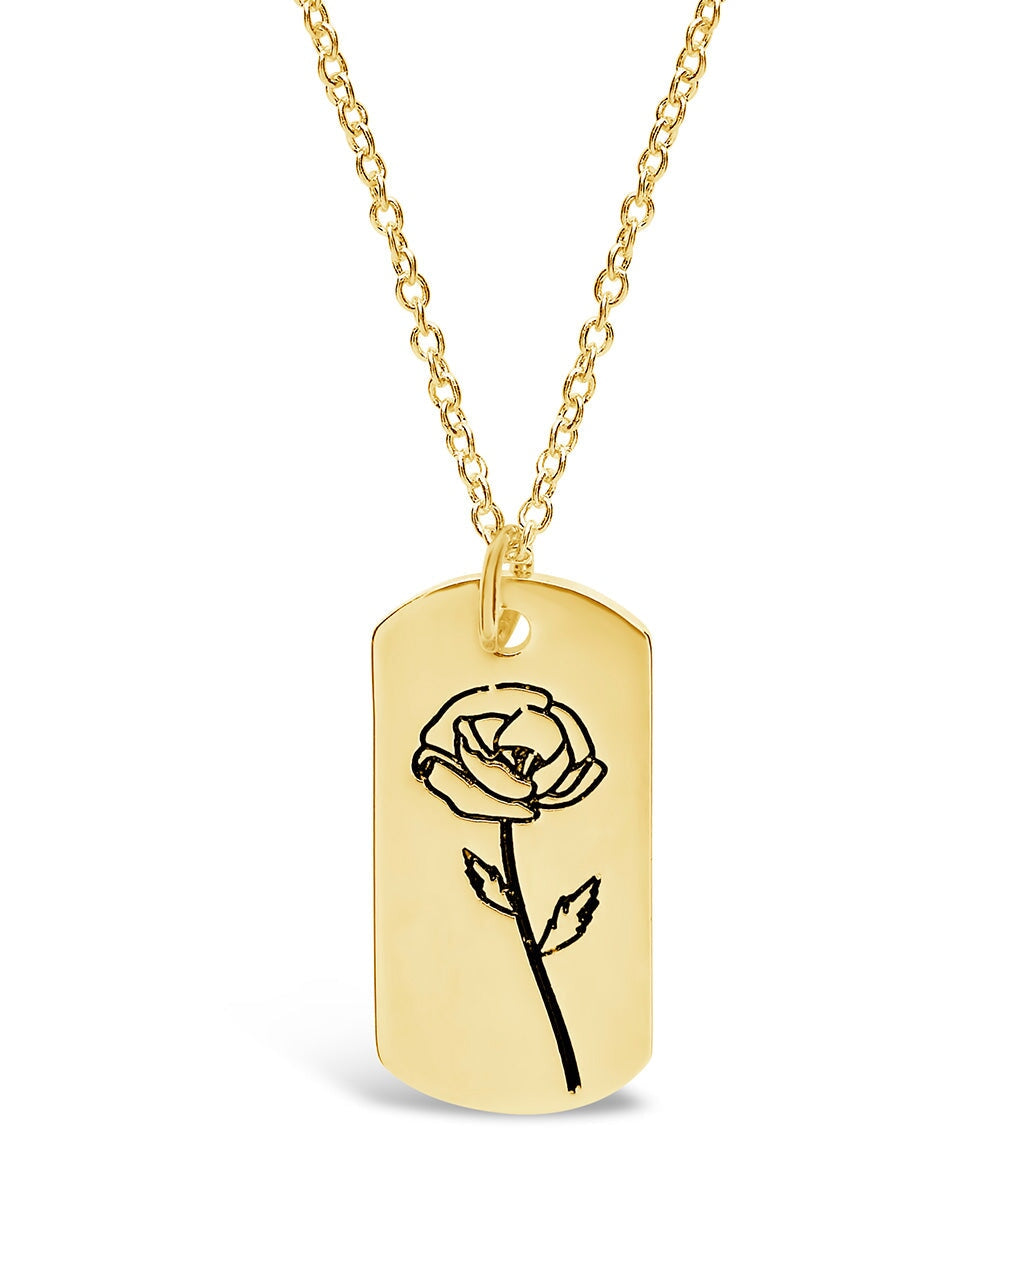 Birth Flower Pendant Necklace Sterling Forever Gold August / Poppy 